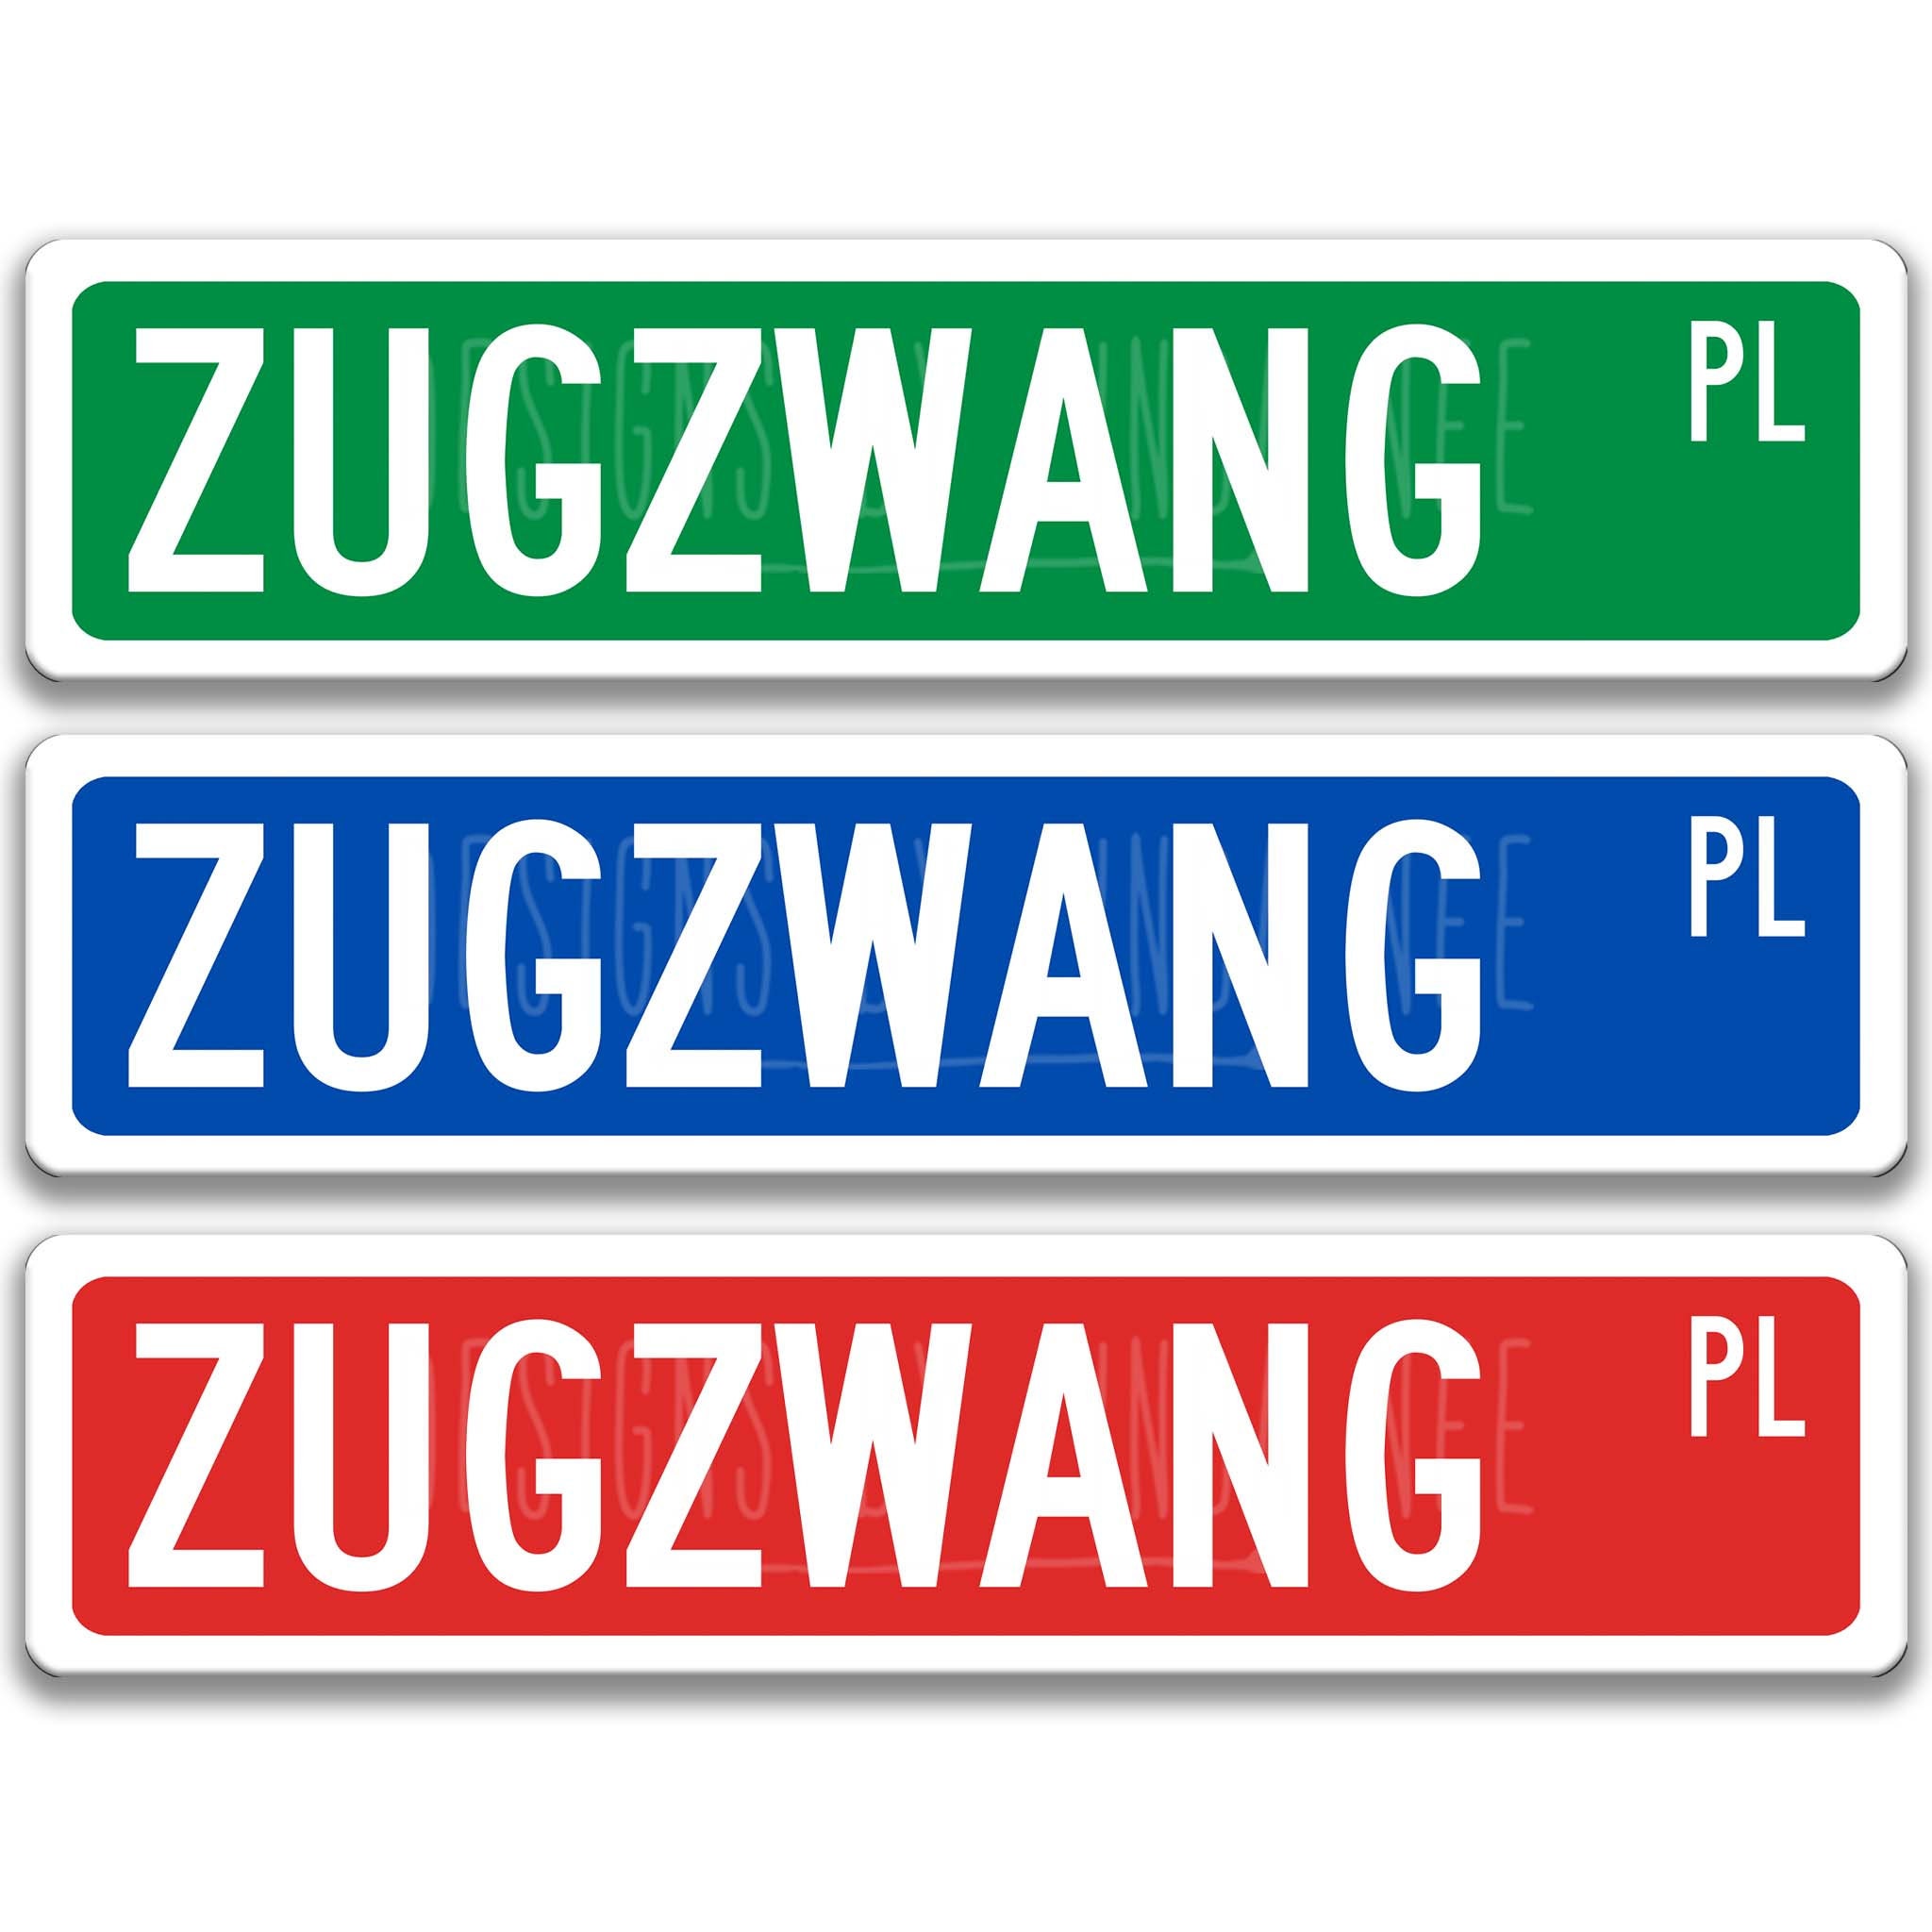 Chess Puzzles: The Art of Zugzwang